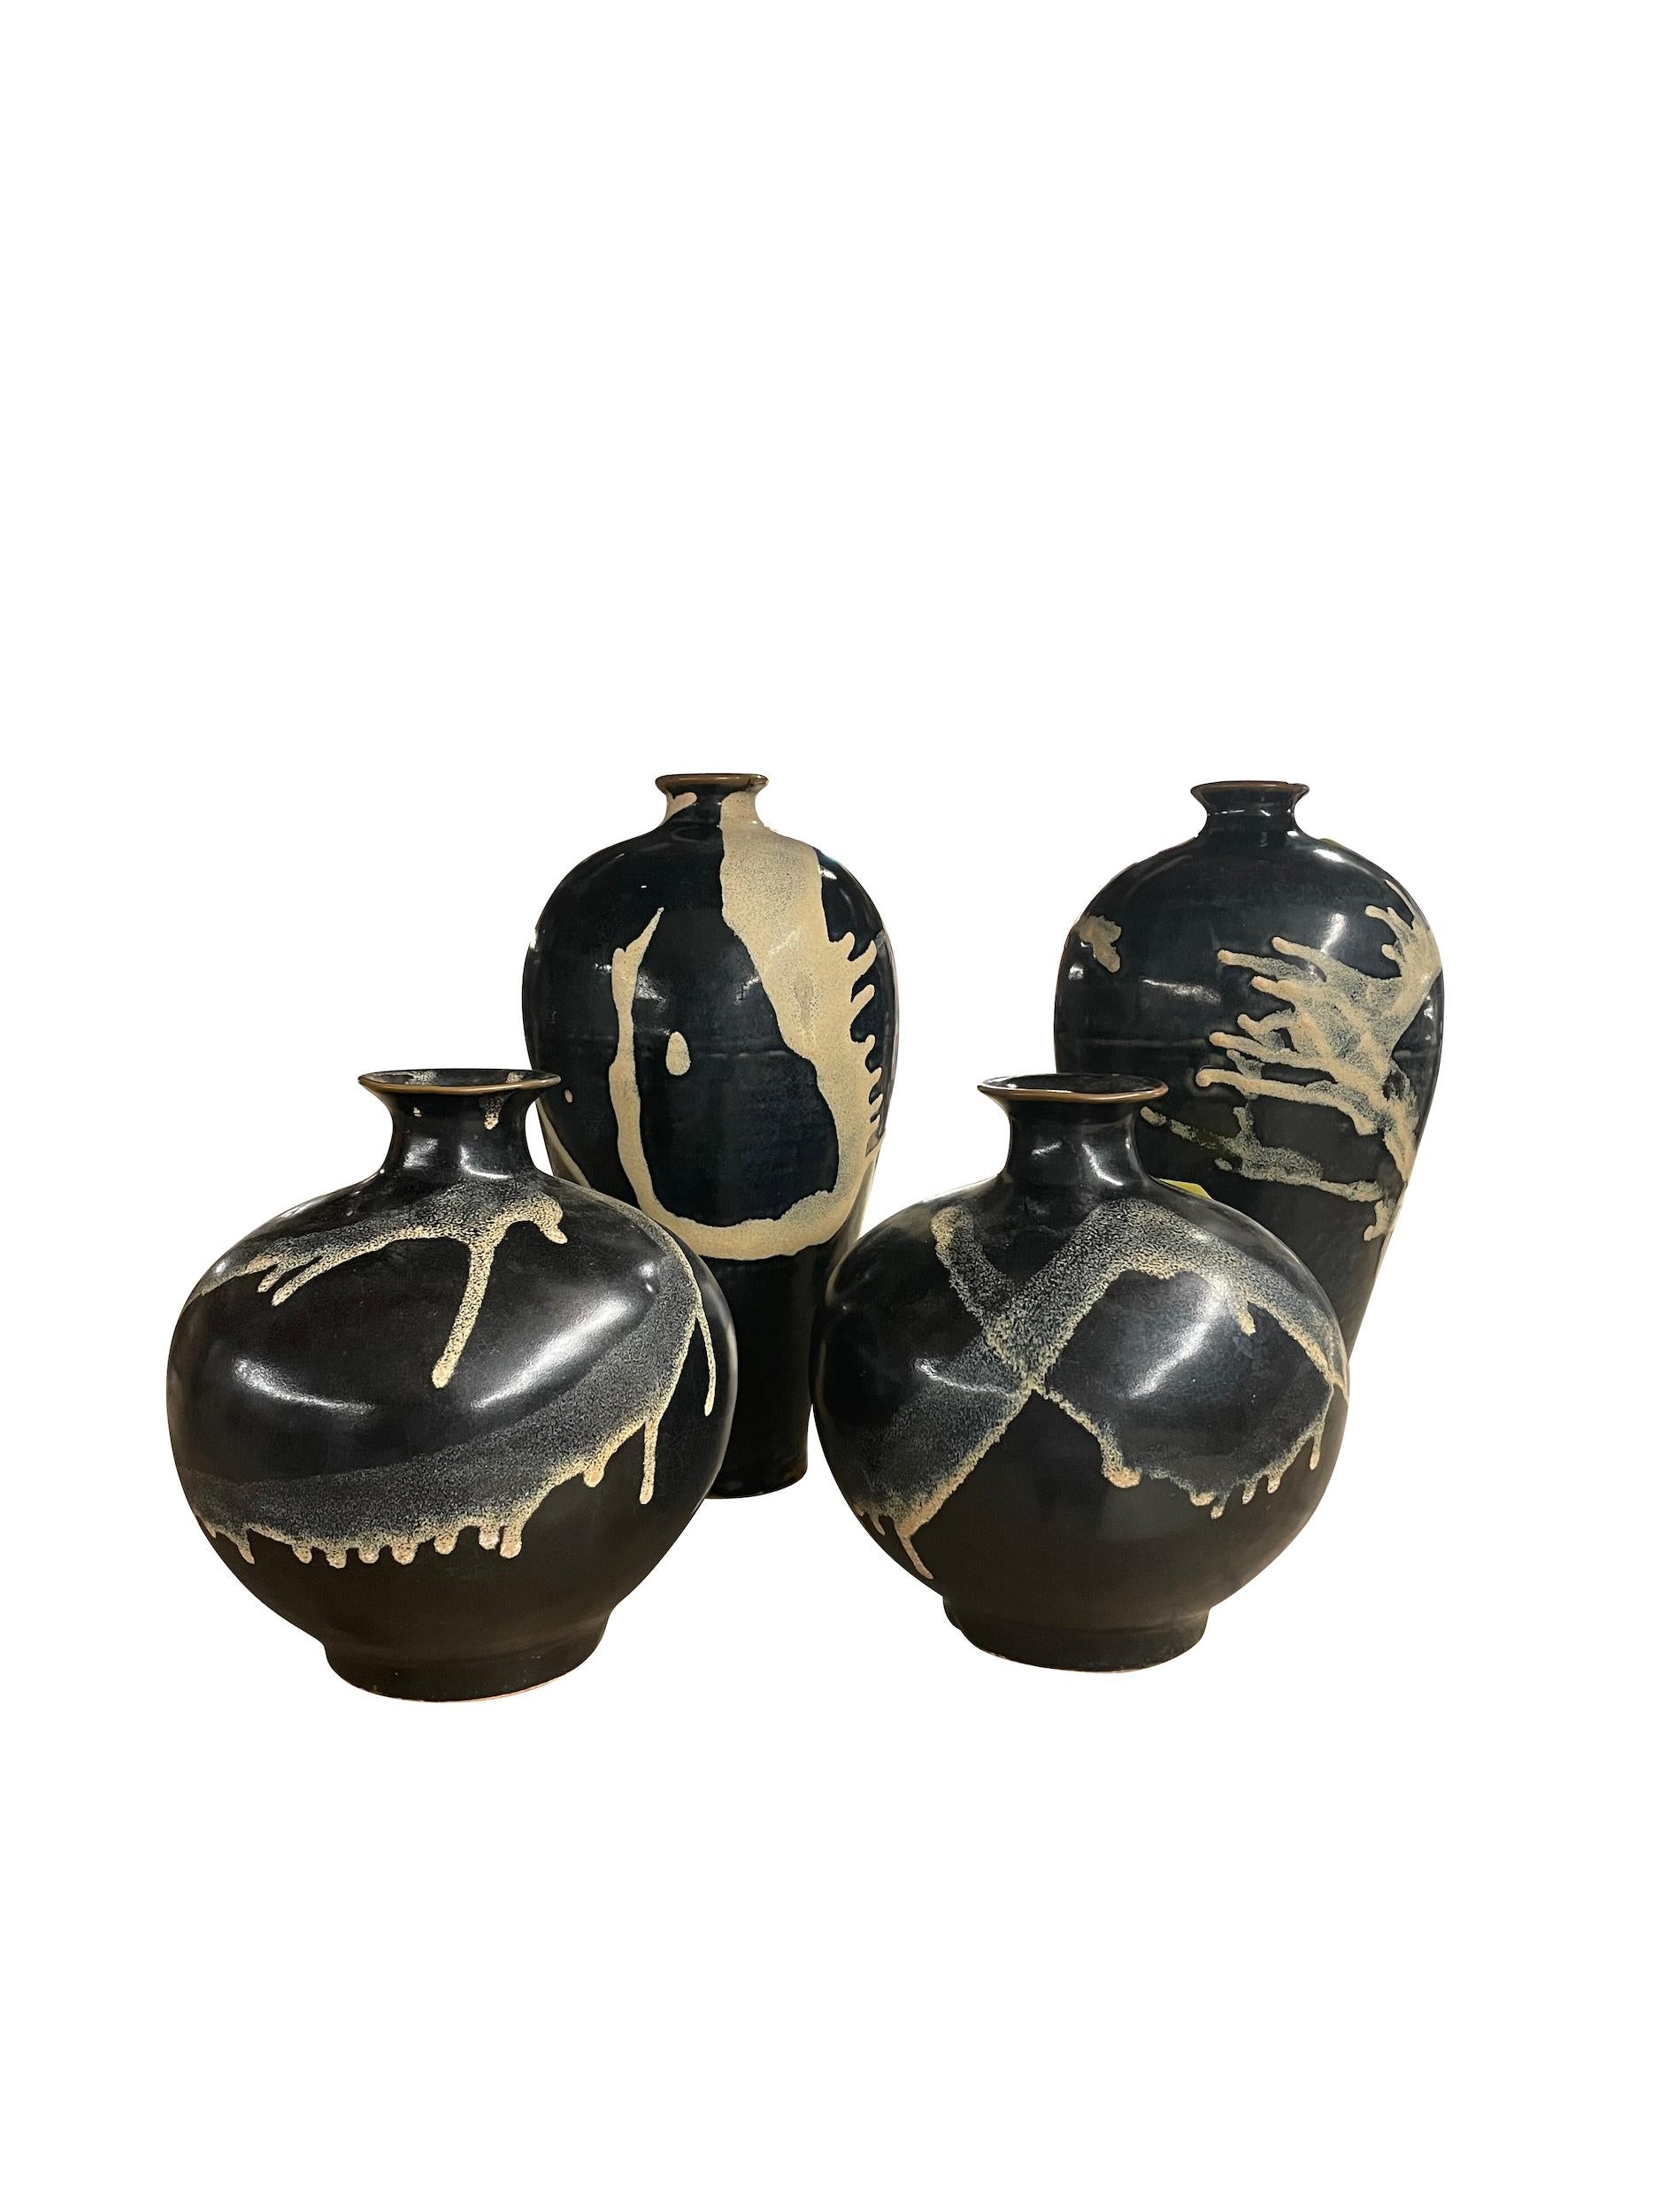 Black And Cream Splattered Glaze Vase, China, Contemporary For Sale 2